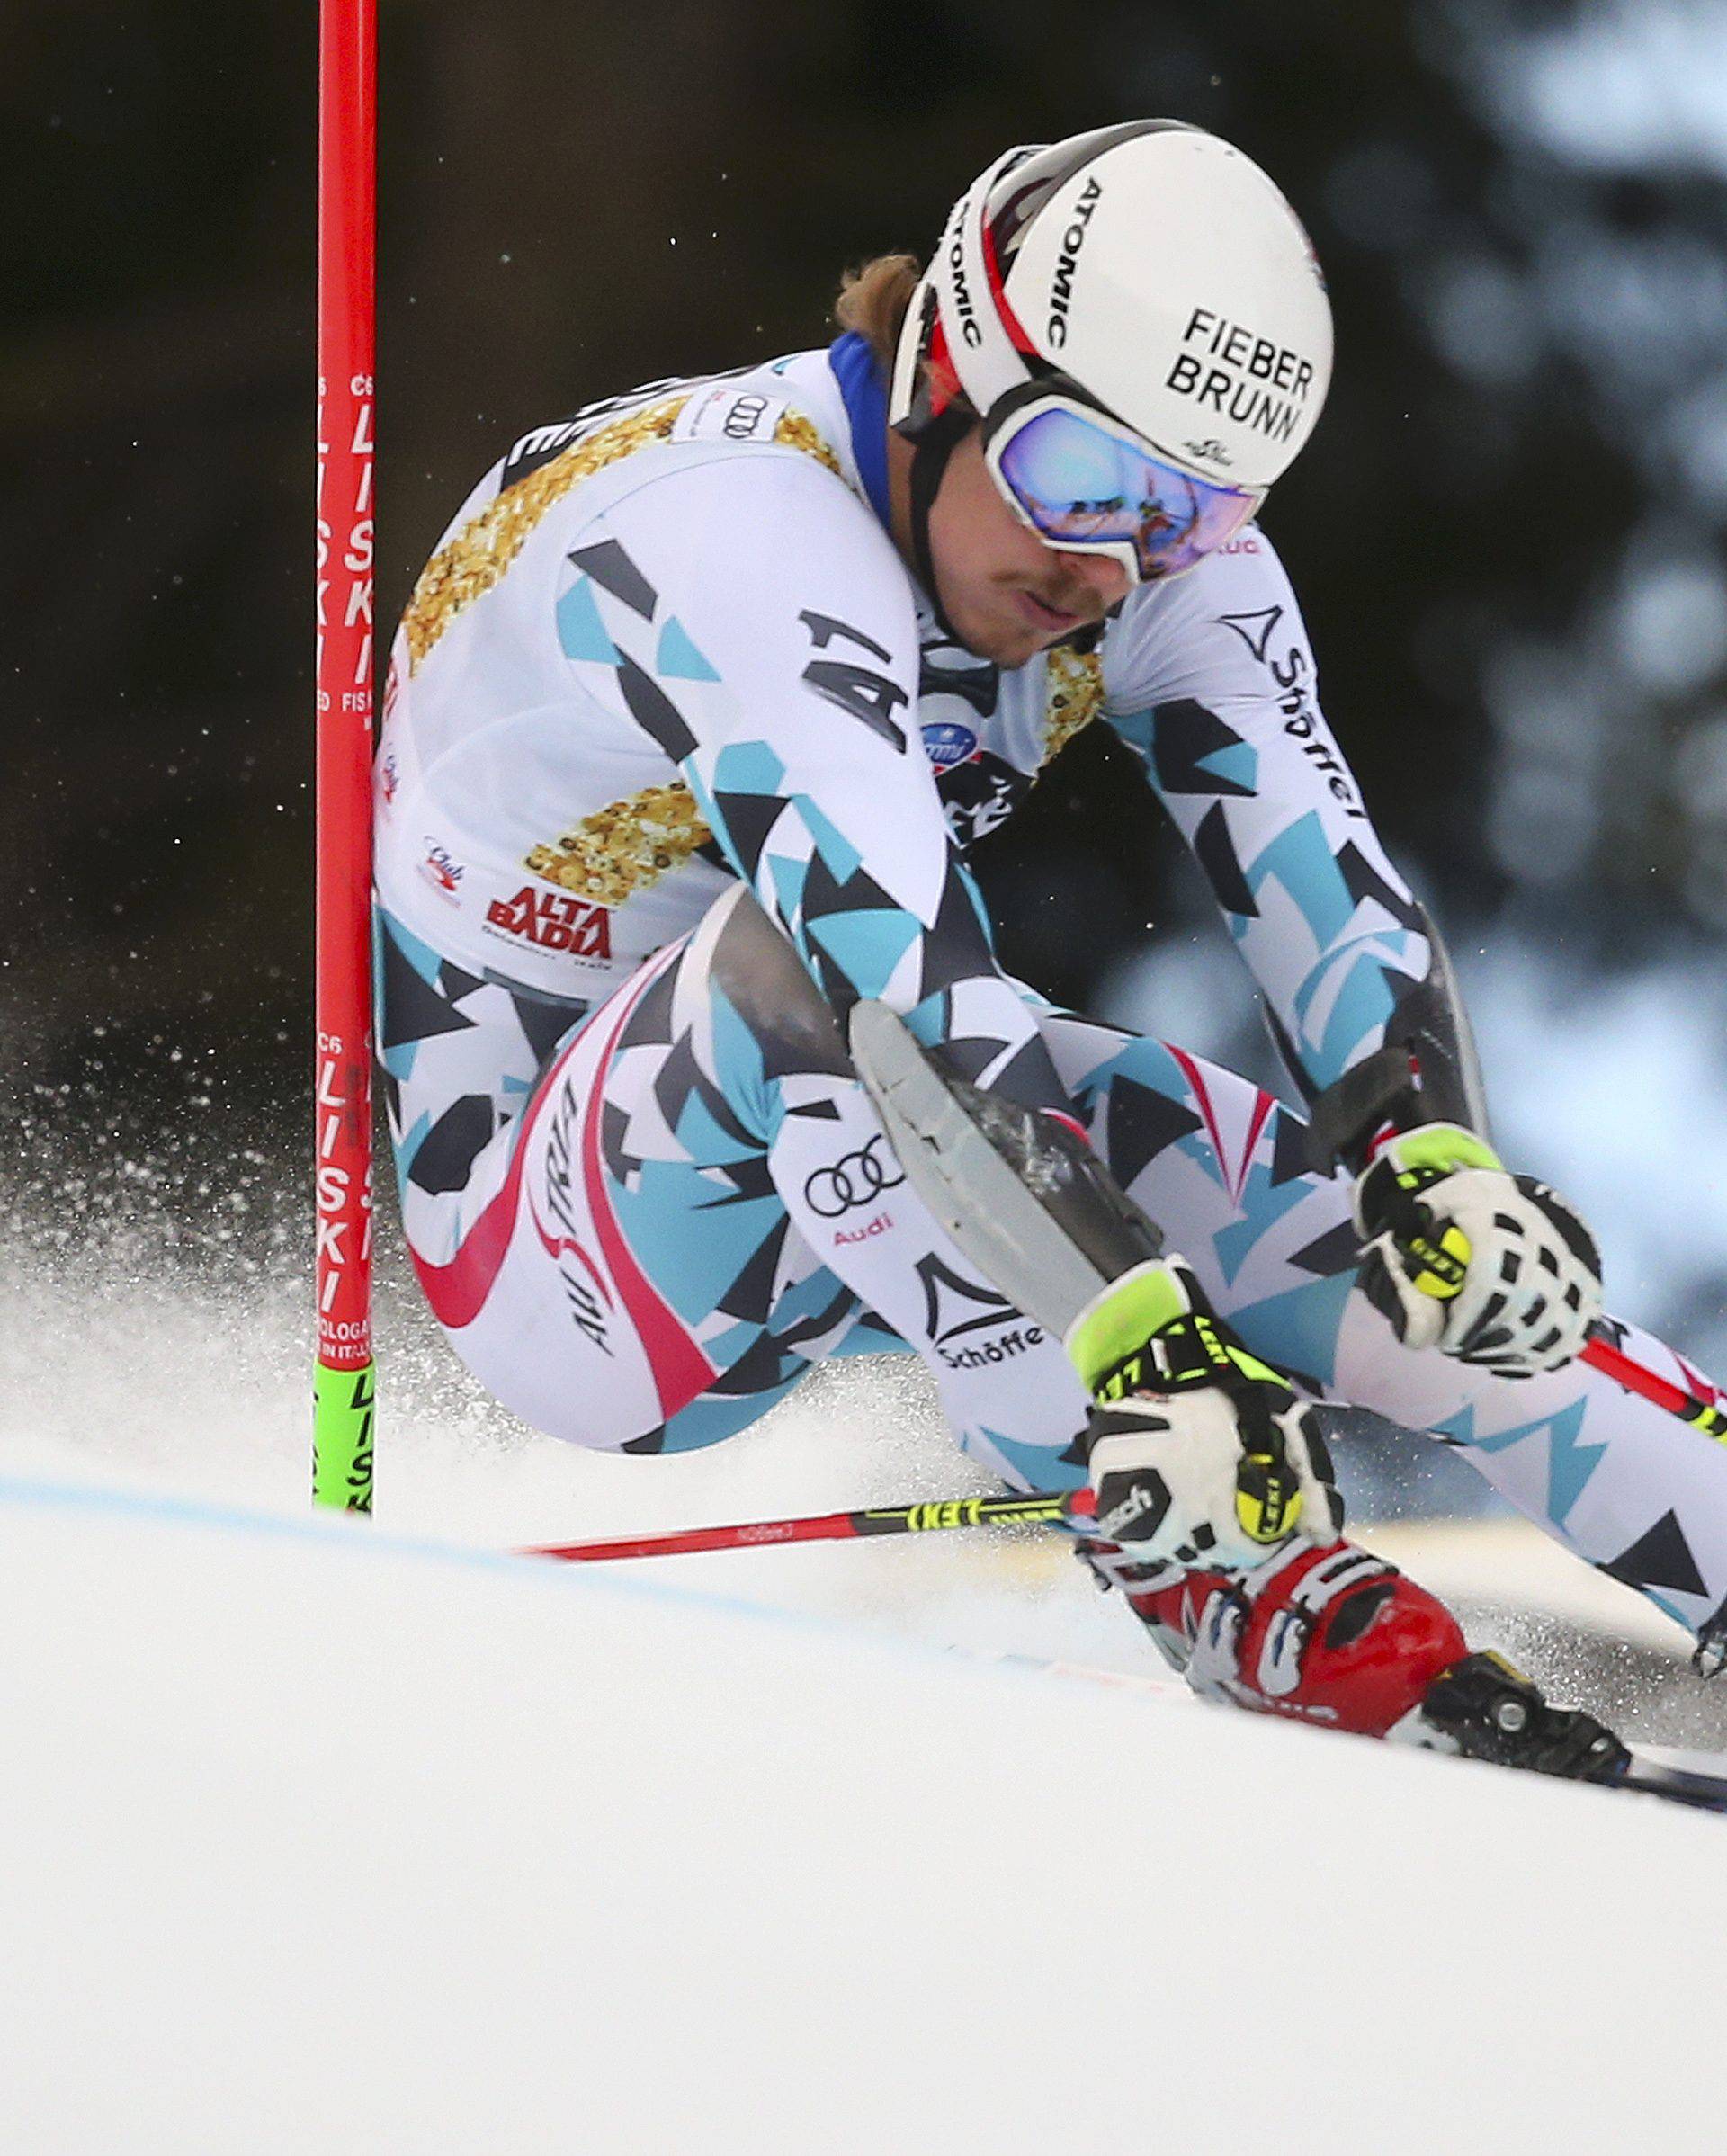 Alpine Skiing - FIS Alpine Skiing World Cup - Men's Giant Slalom 1st run